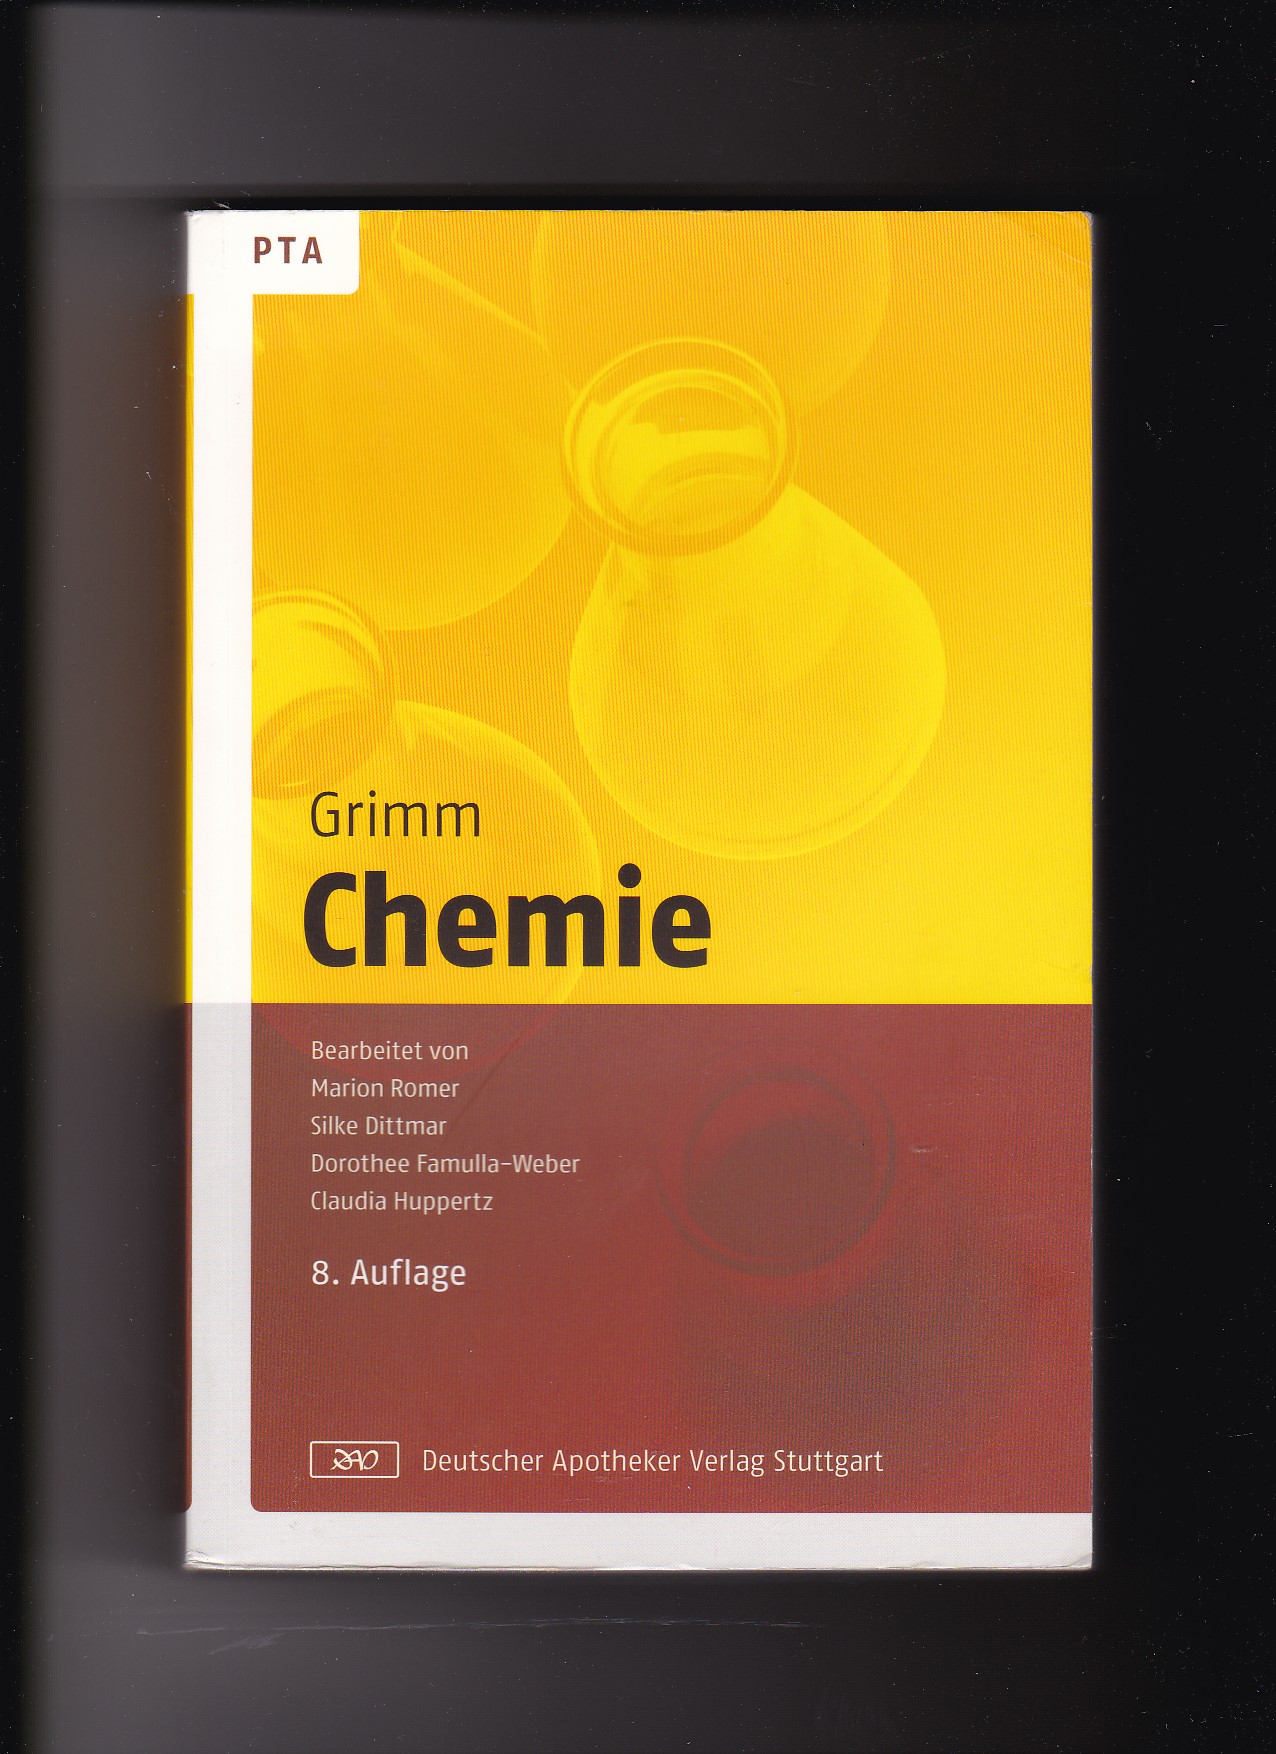 Doris Grimm, Marion Romer, Silke Dittmar, Chemie  /  Chemie für PTA  8. Auflage - Grimm, Carola, Marion Romer und Silke Dittmar